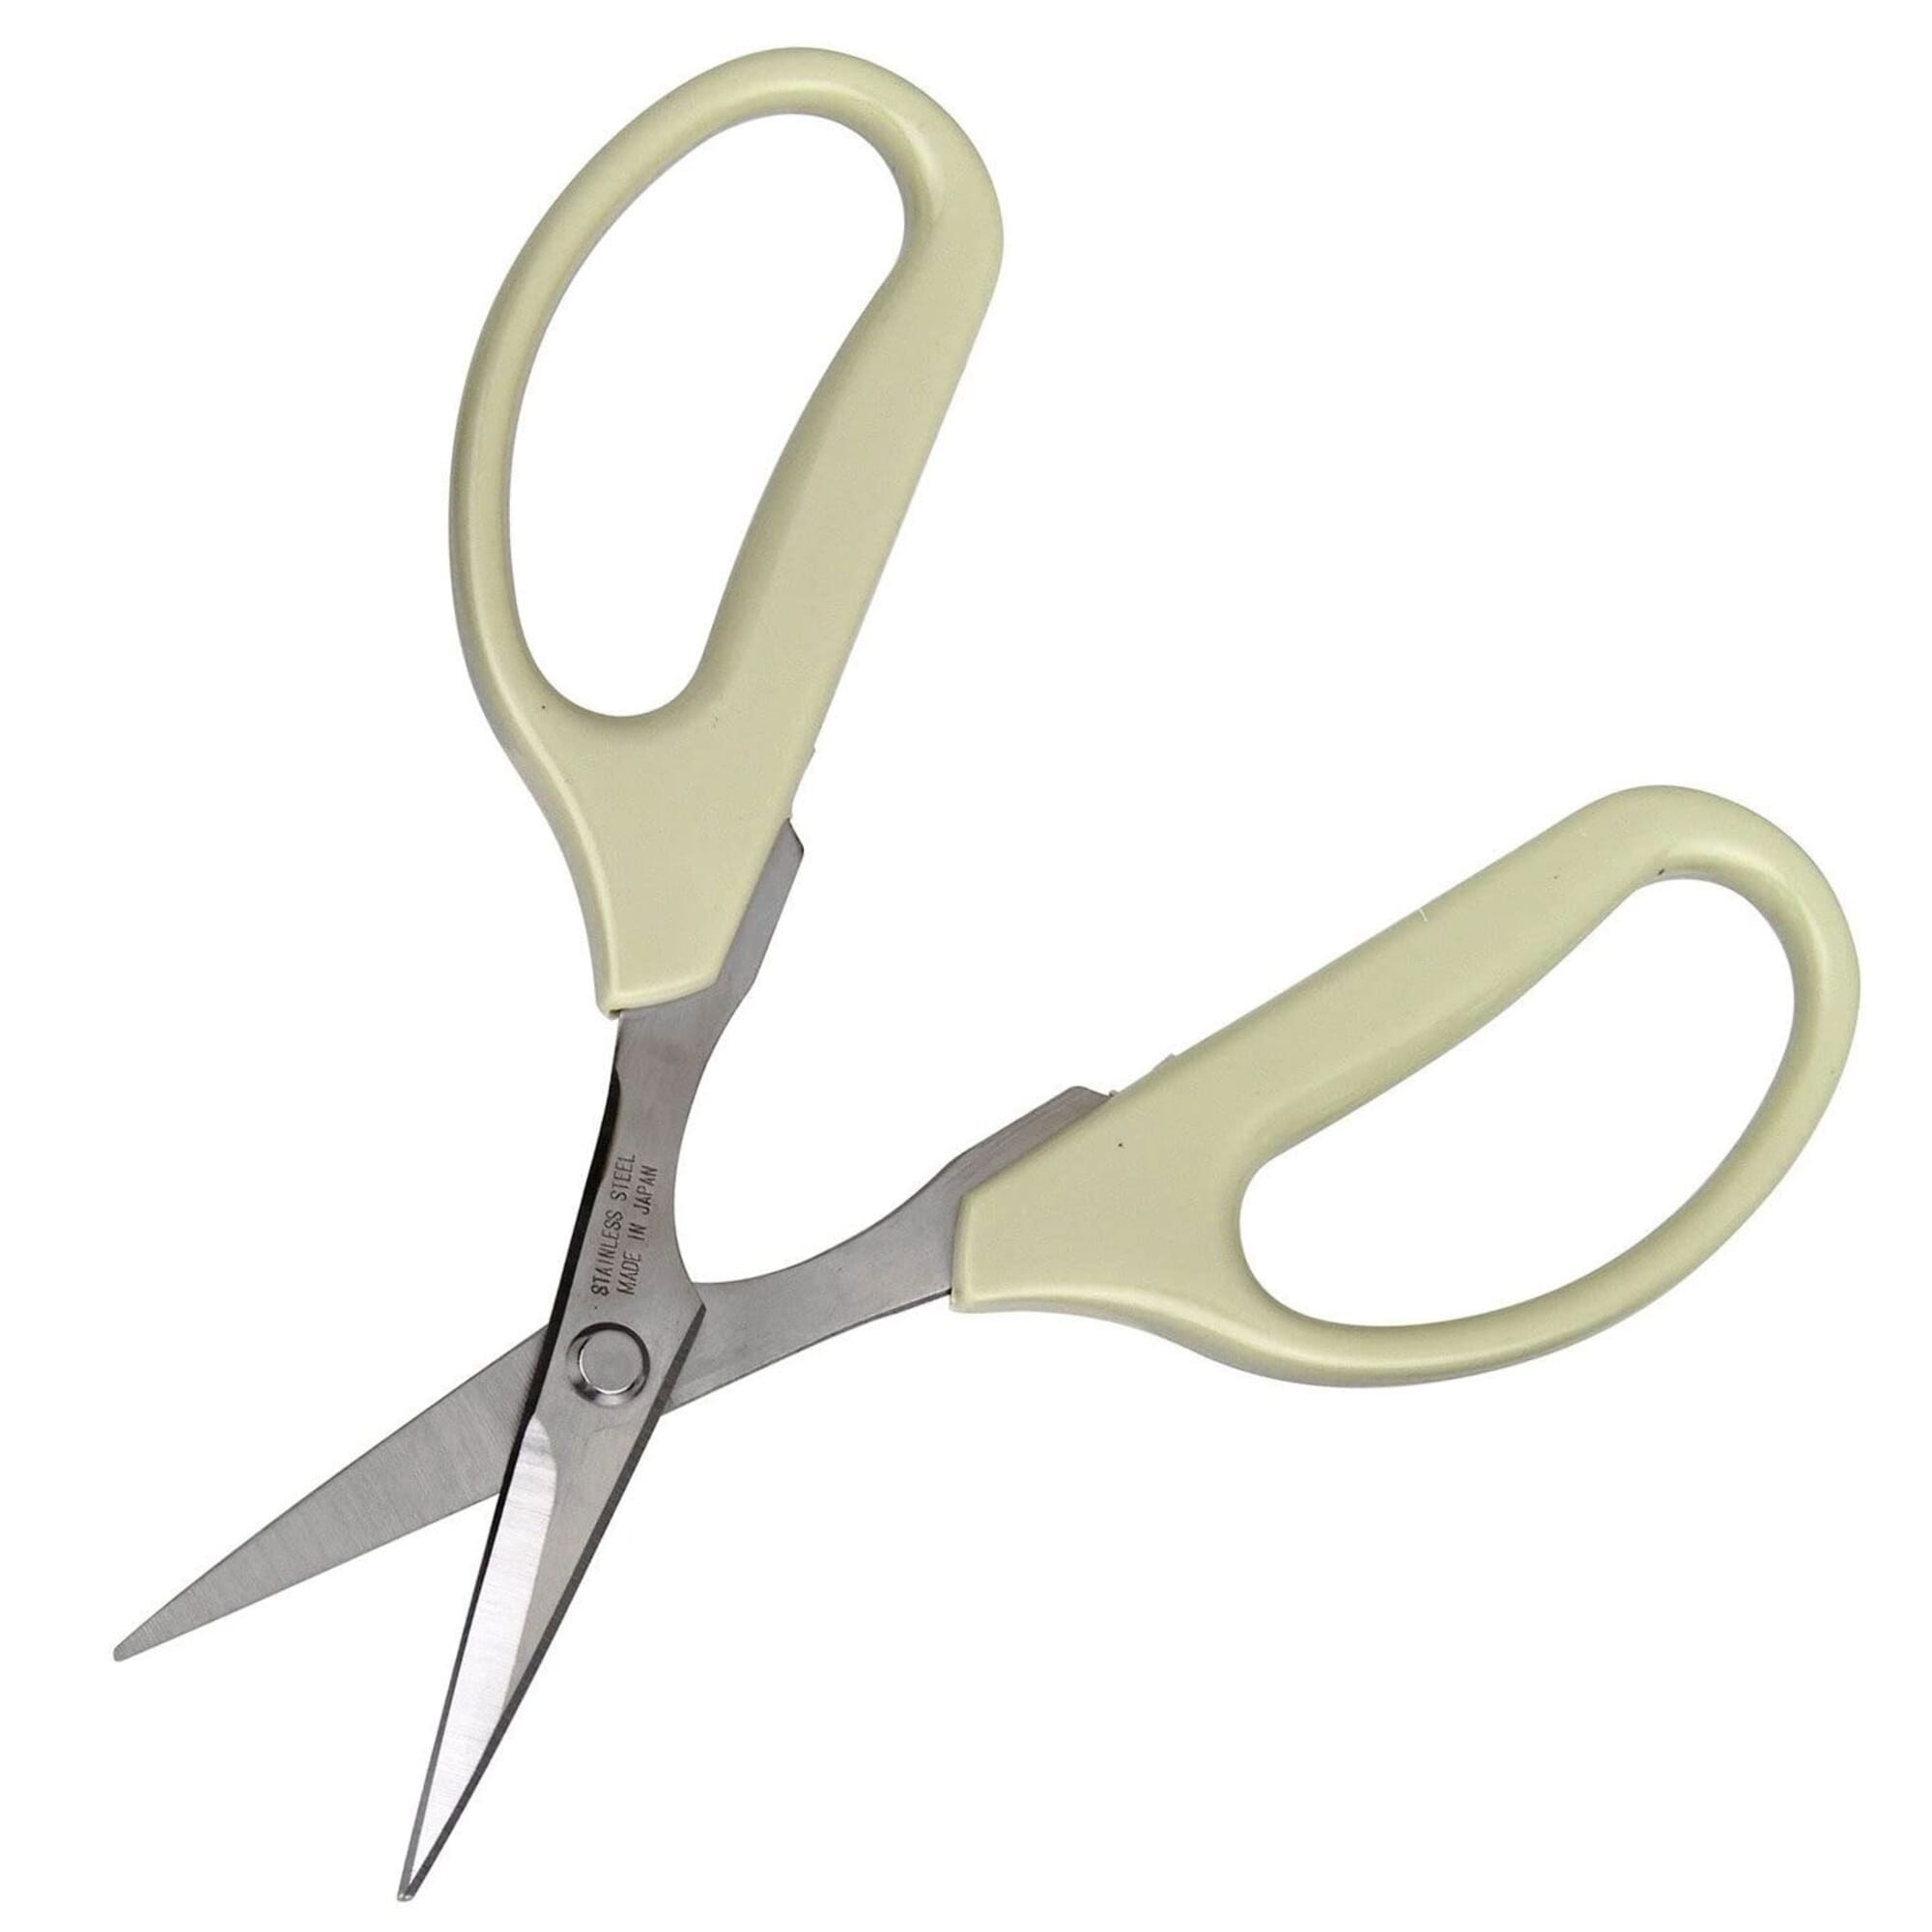 https://goodsjapan.sirv.com/item/images/42937/full/Craft-scissors-Leather-craft-tool-scissors-----2-.jpg?scale.width=2000&scale.height=2000